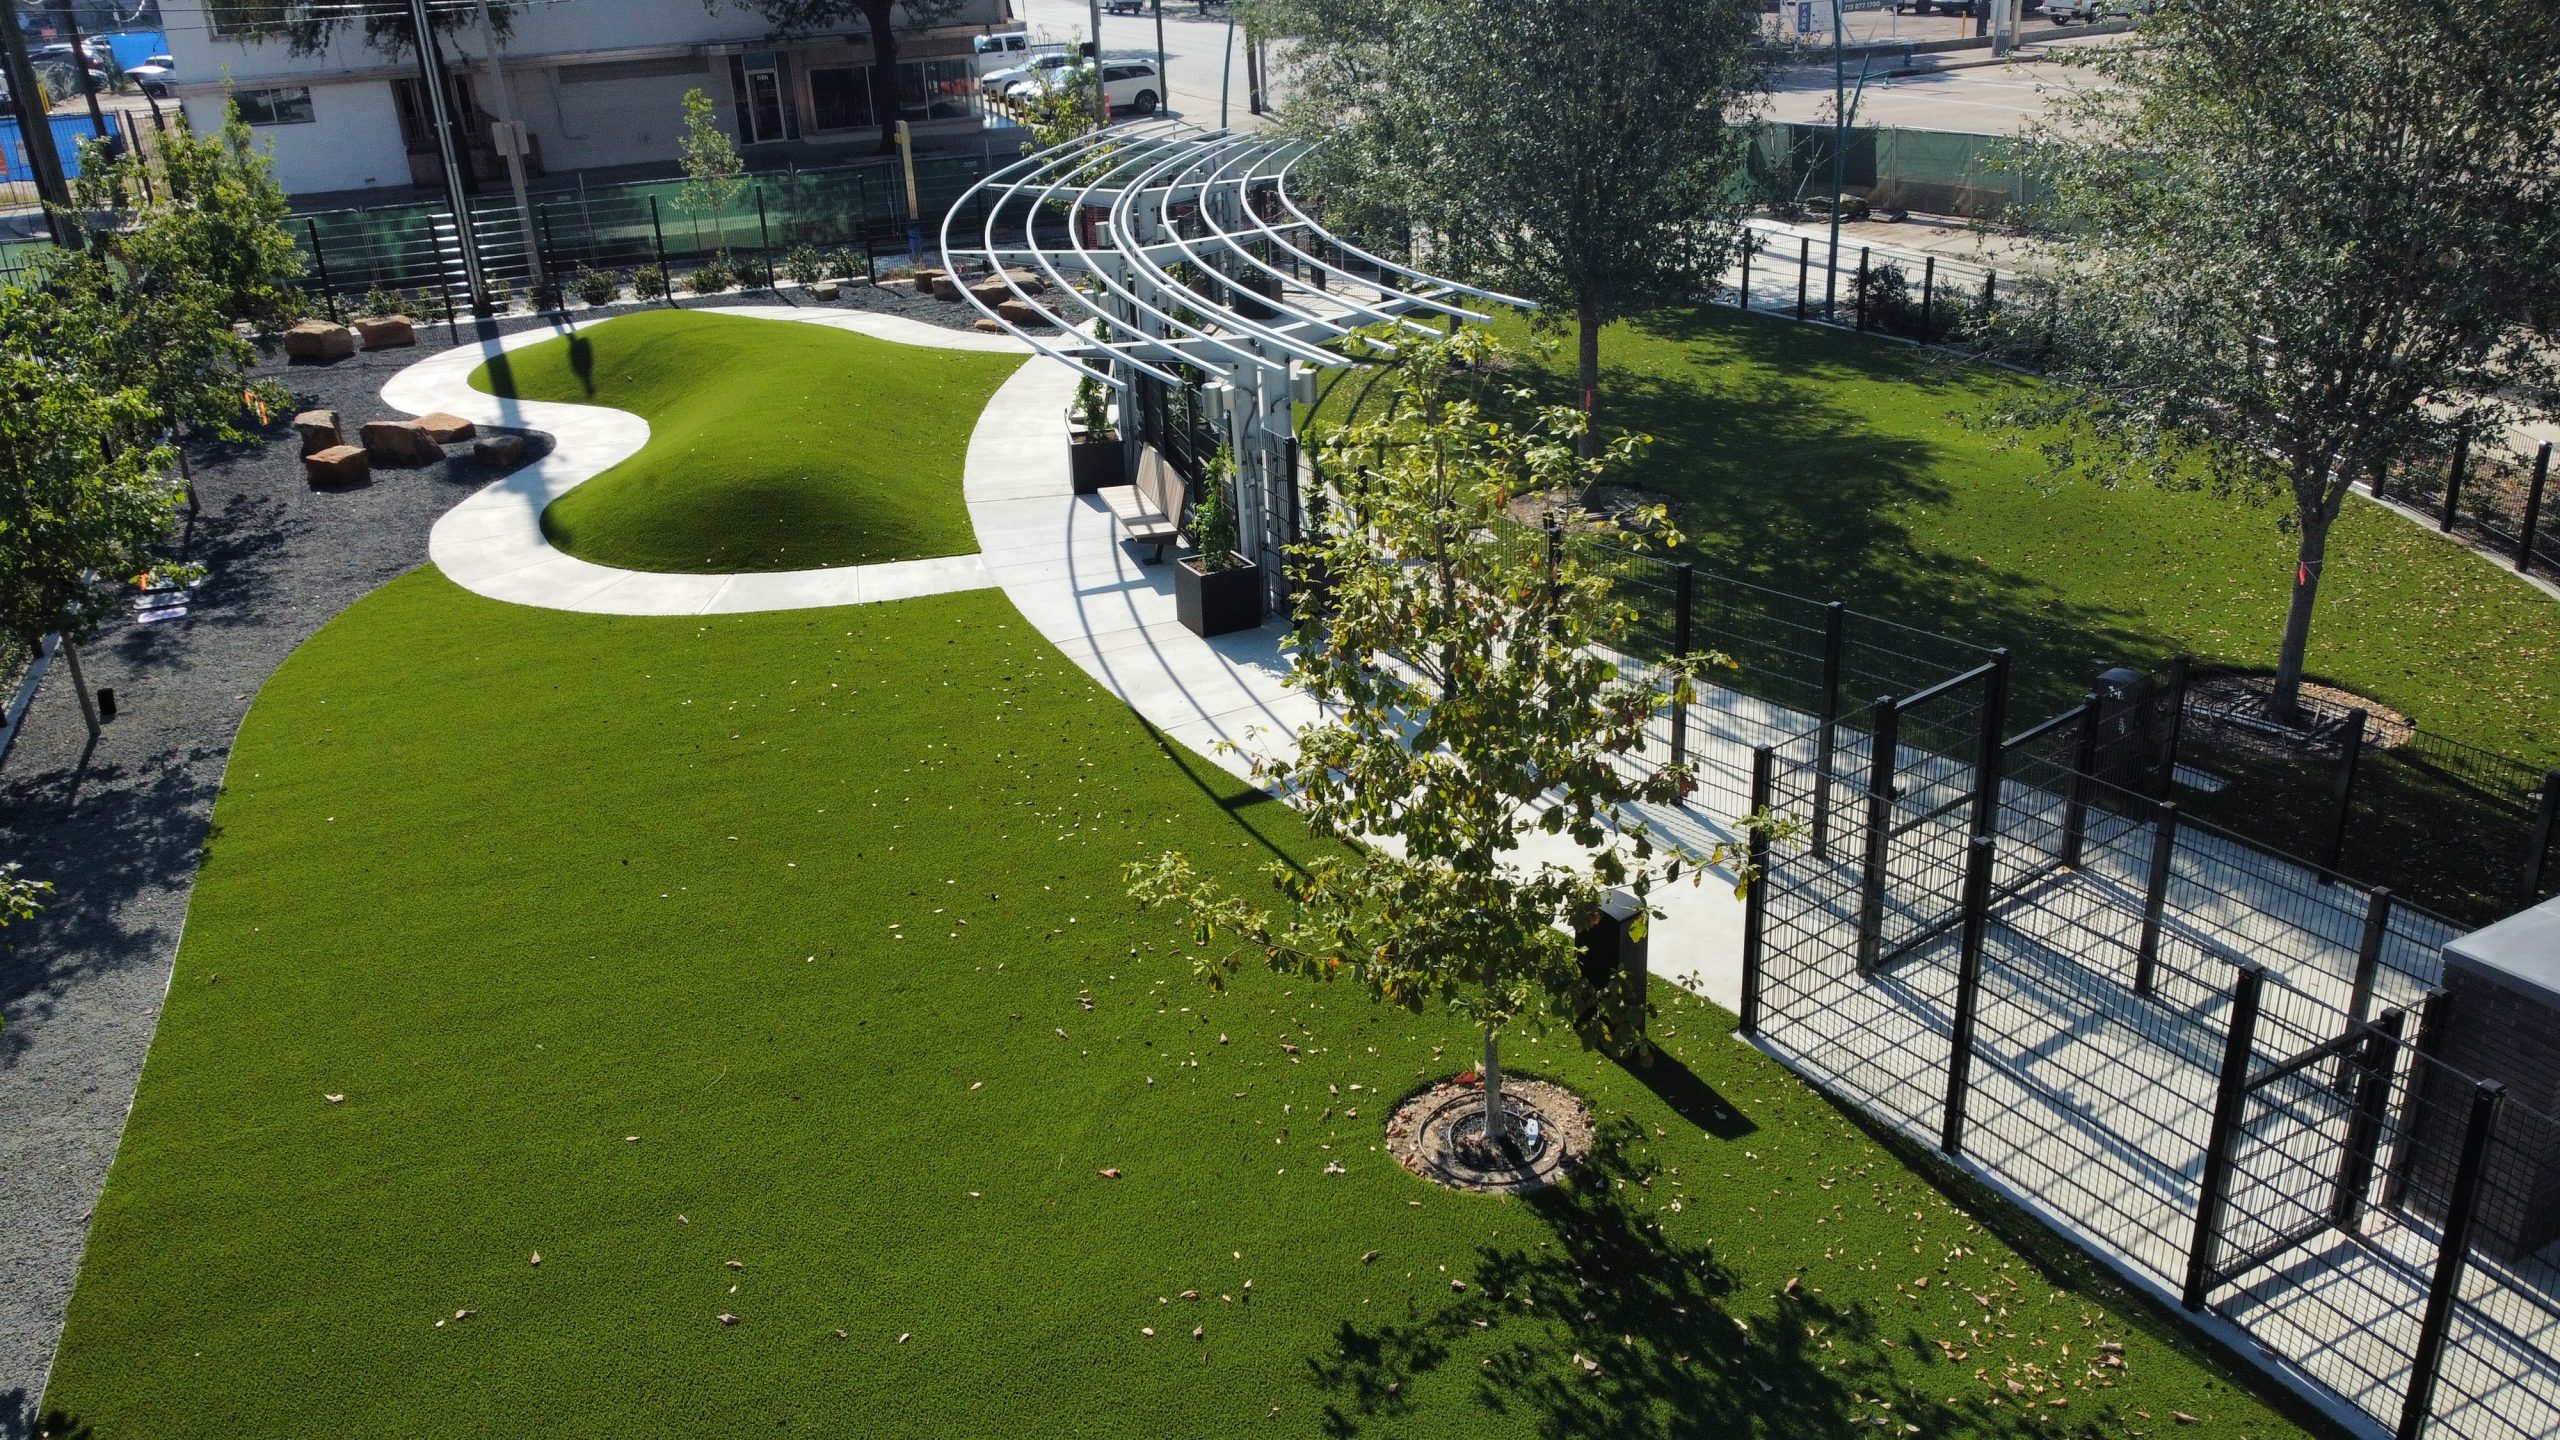 Drone shot of artificial grass dog park